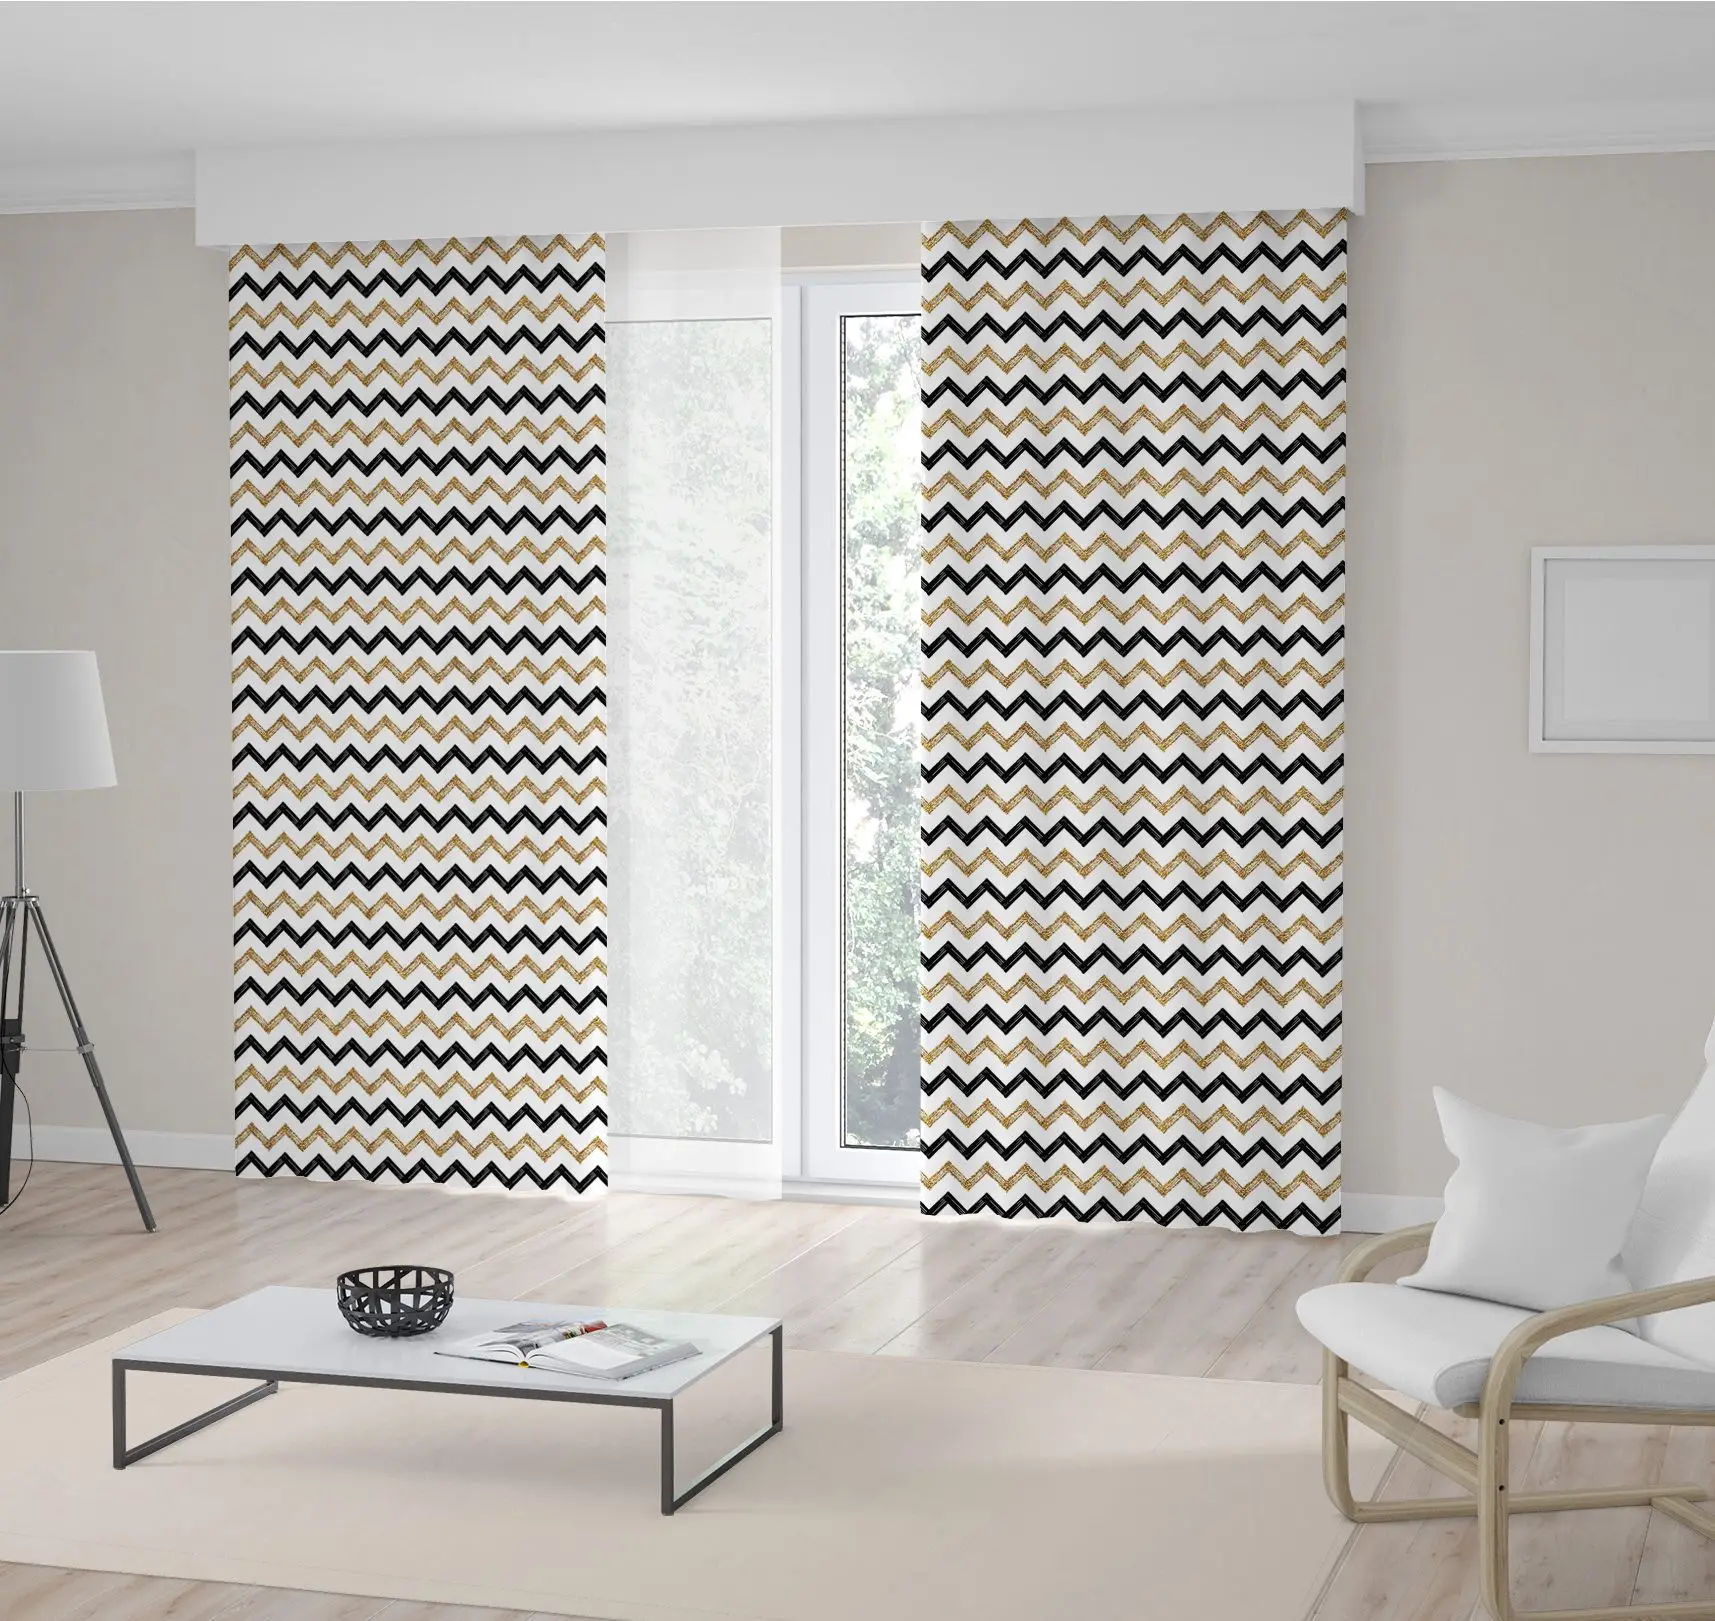 

Curtain Zigzag Chevron Patterns Black Gold Horizontal Stripes Lines Stylish Modern Home Decor